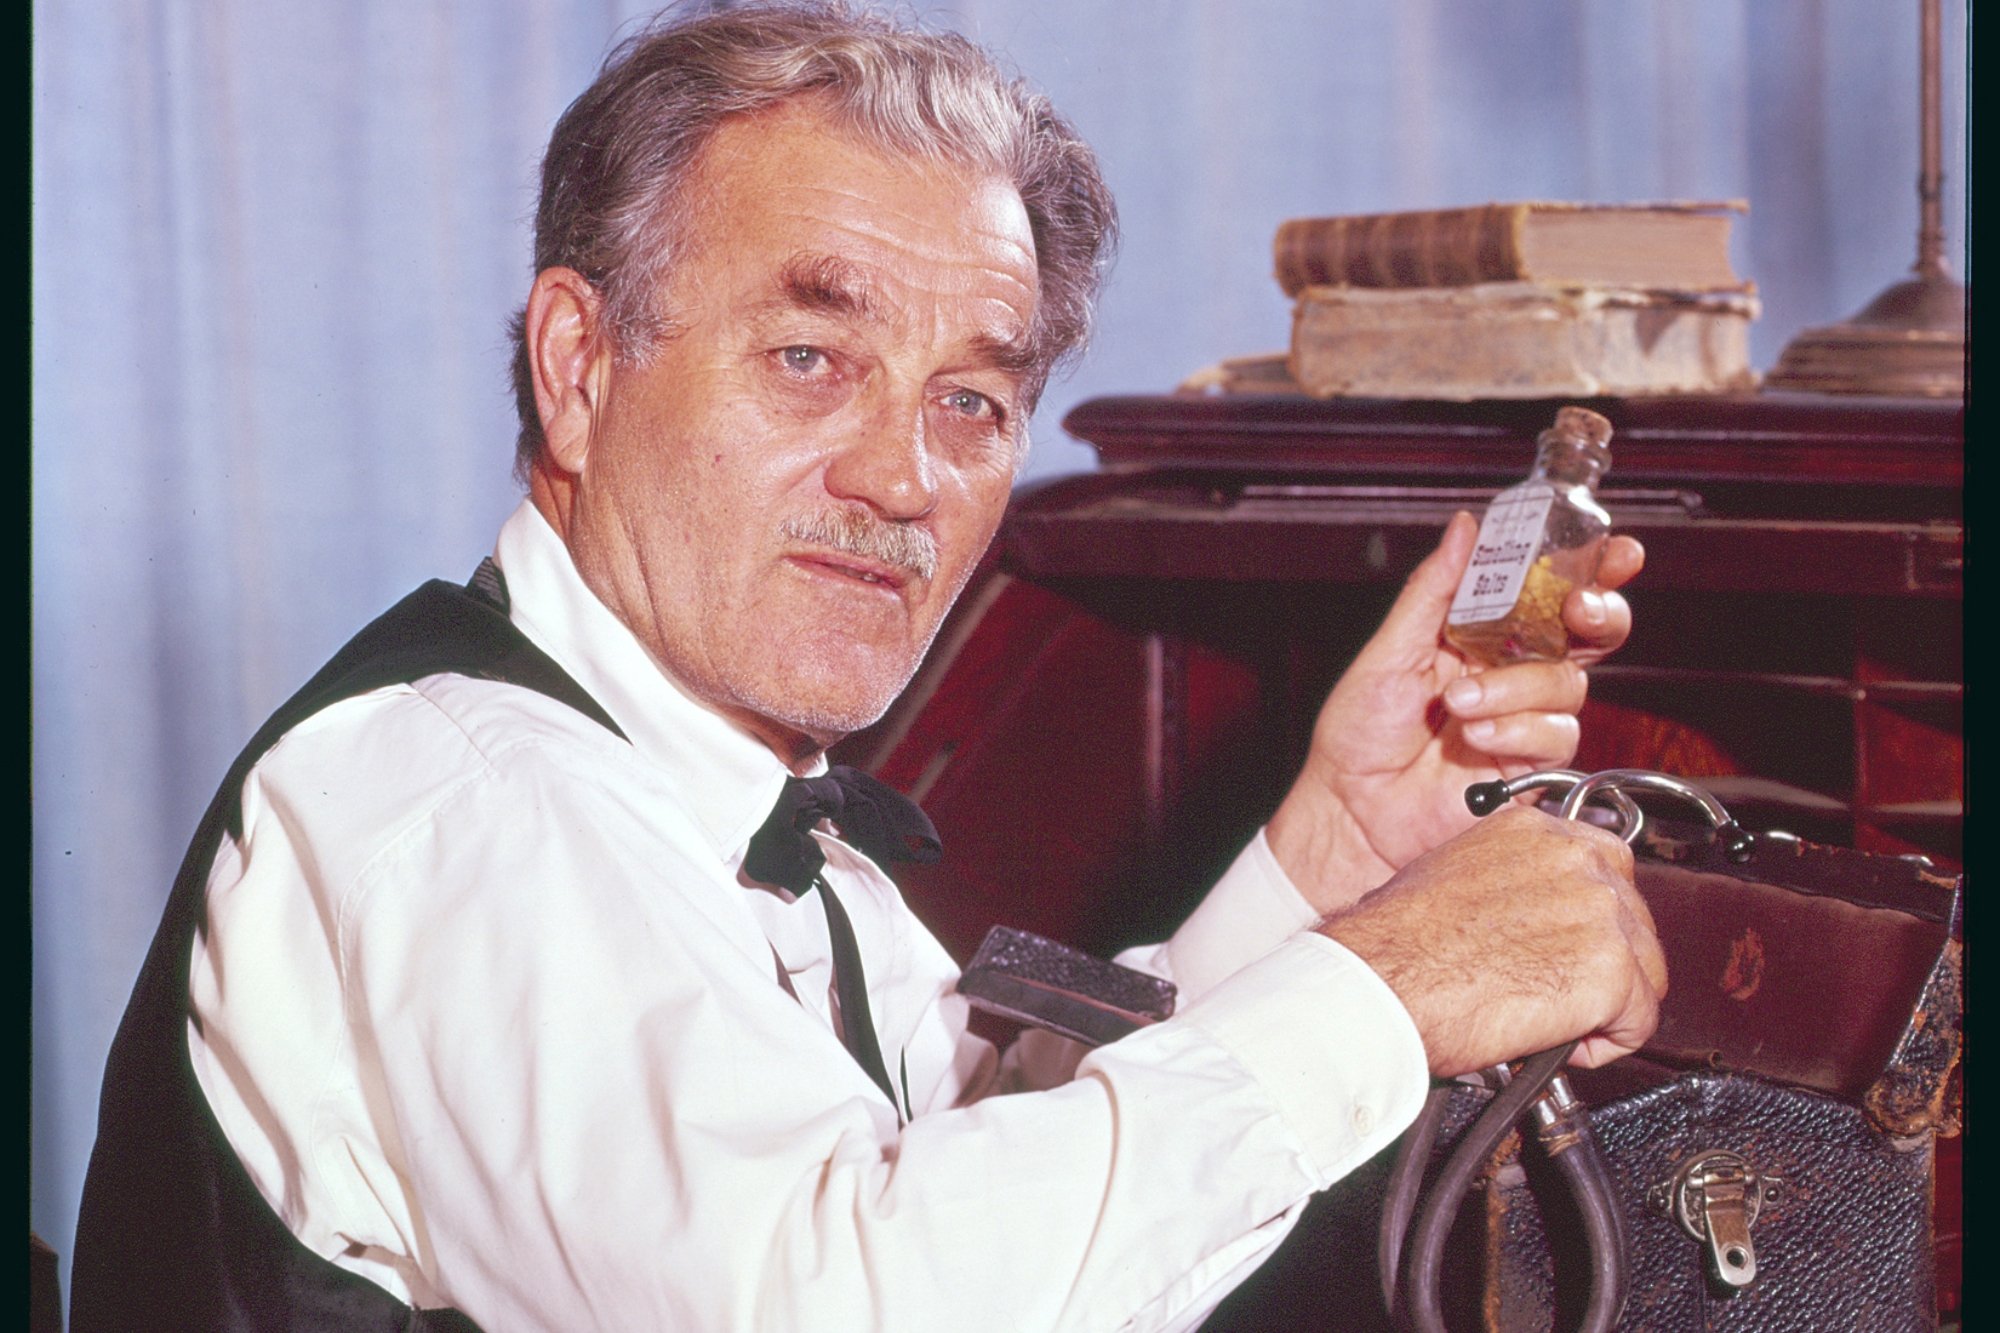 'Gunsmoke' Milburn Stone as Doc Adams holding a bottle of medicine